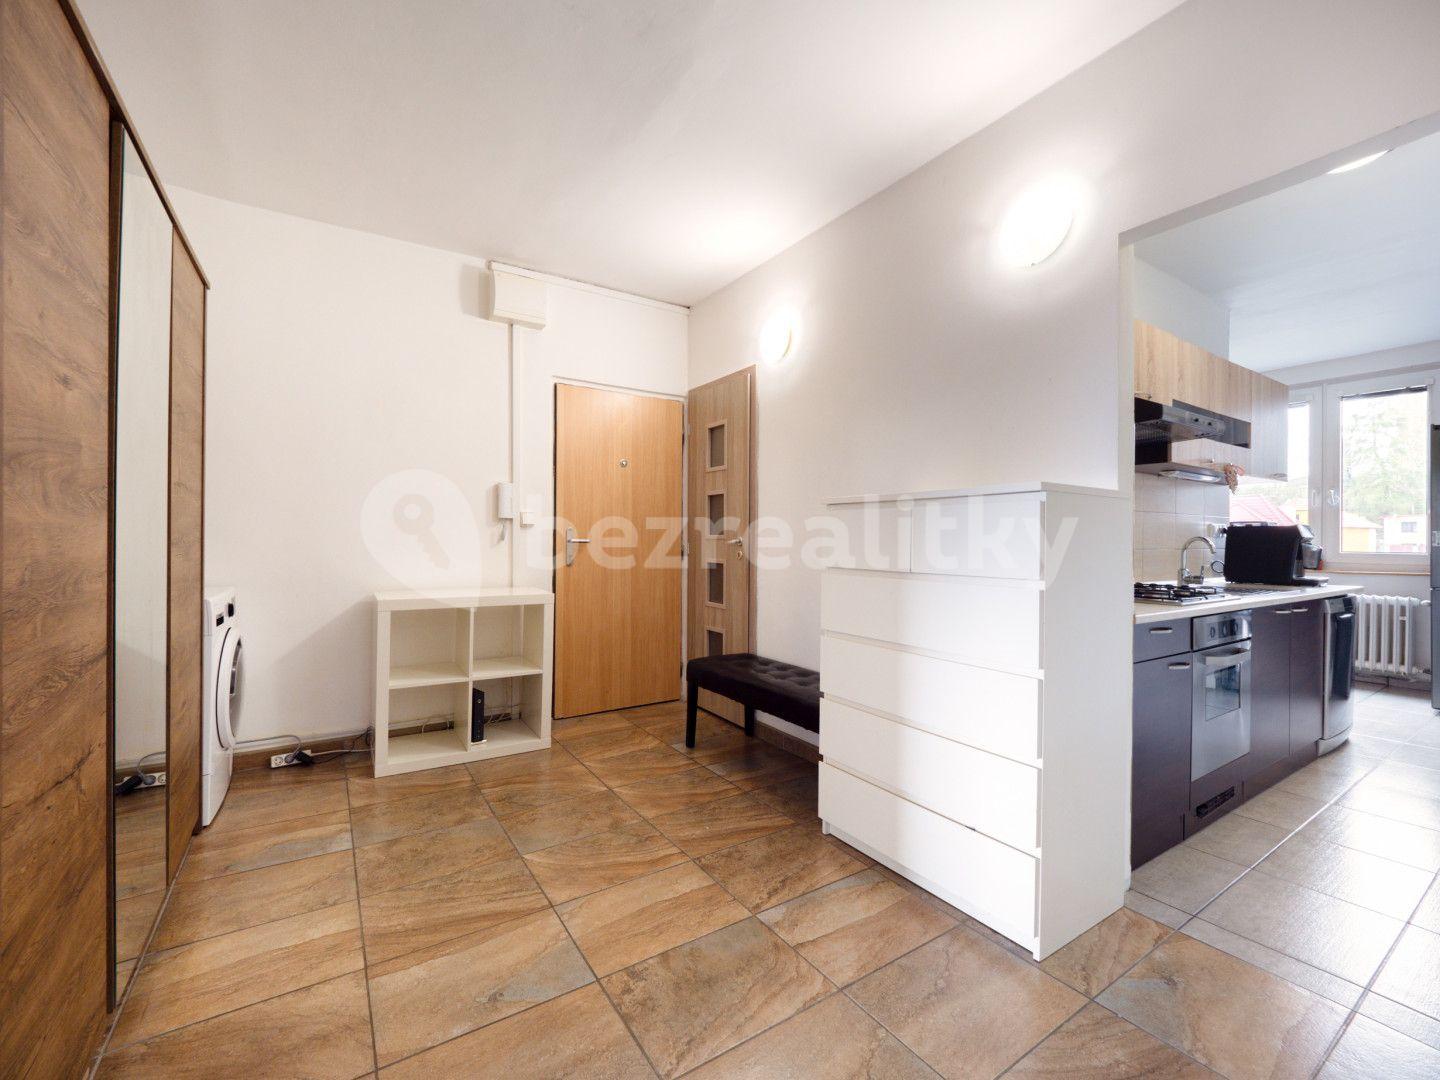 3 bedroom flat for sale, 80 m², Kamenická, Děčín, Ústecký Region